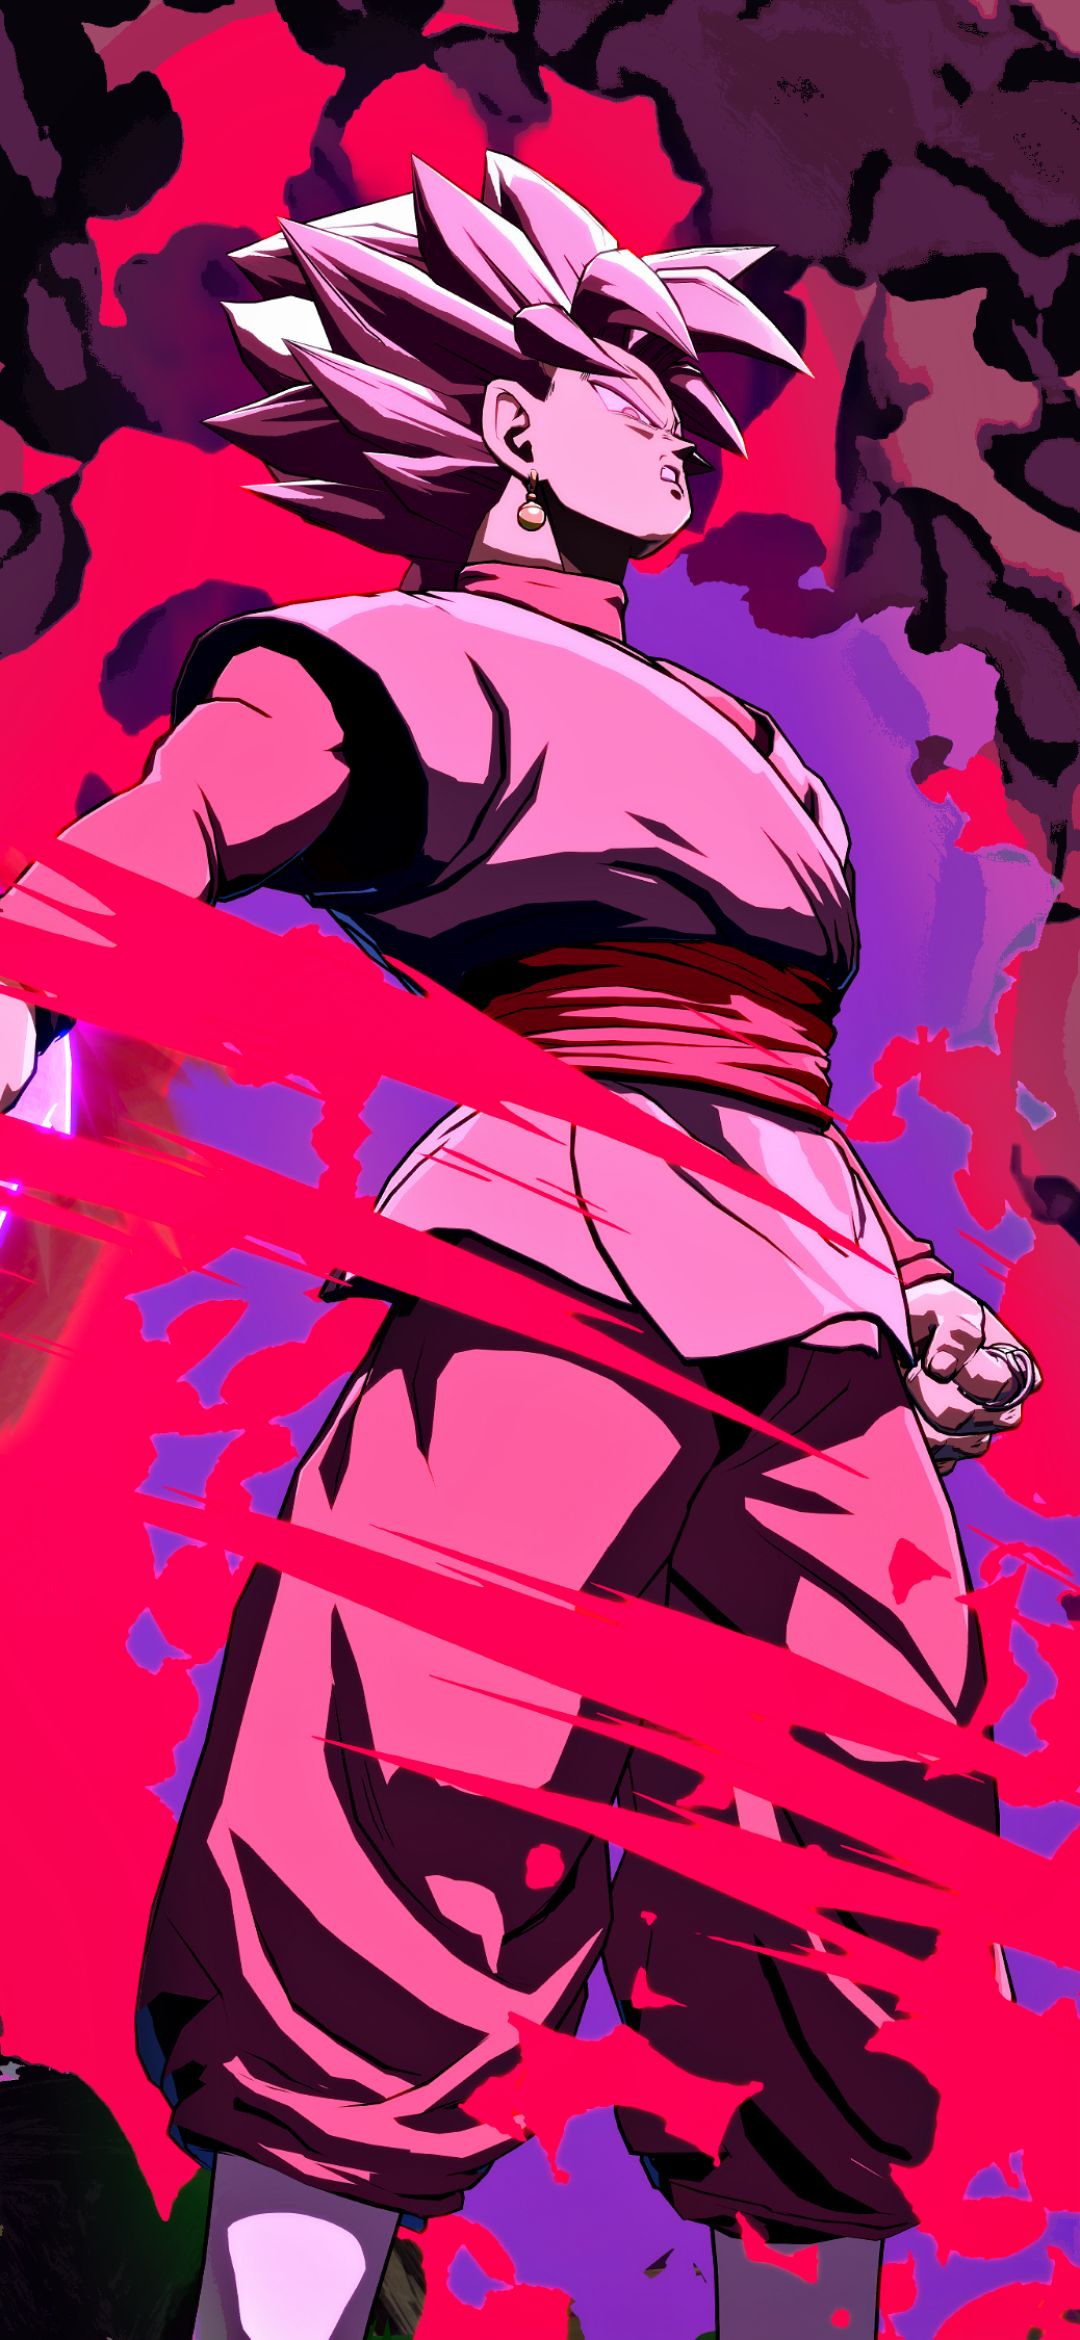 Goku Black ssj Rose  Dragon ball wallpapers, Dragon ball wallpaper iphone,  Anime dragon ball super